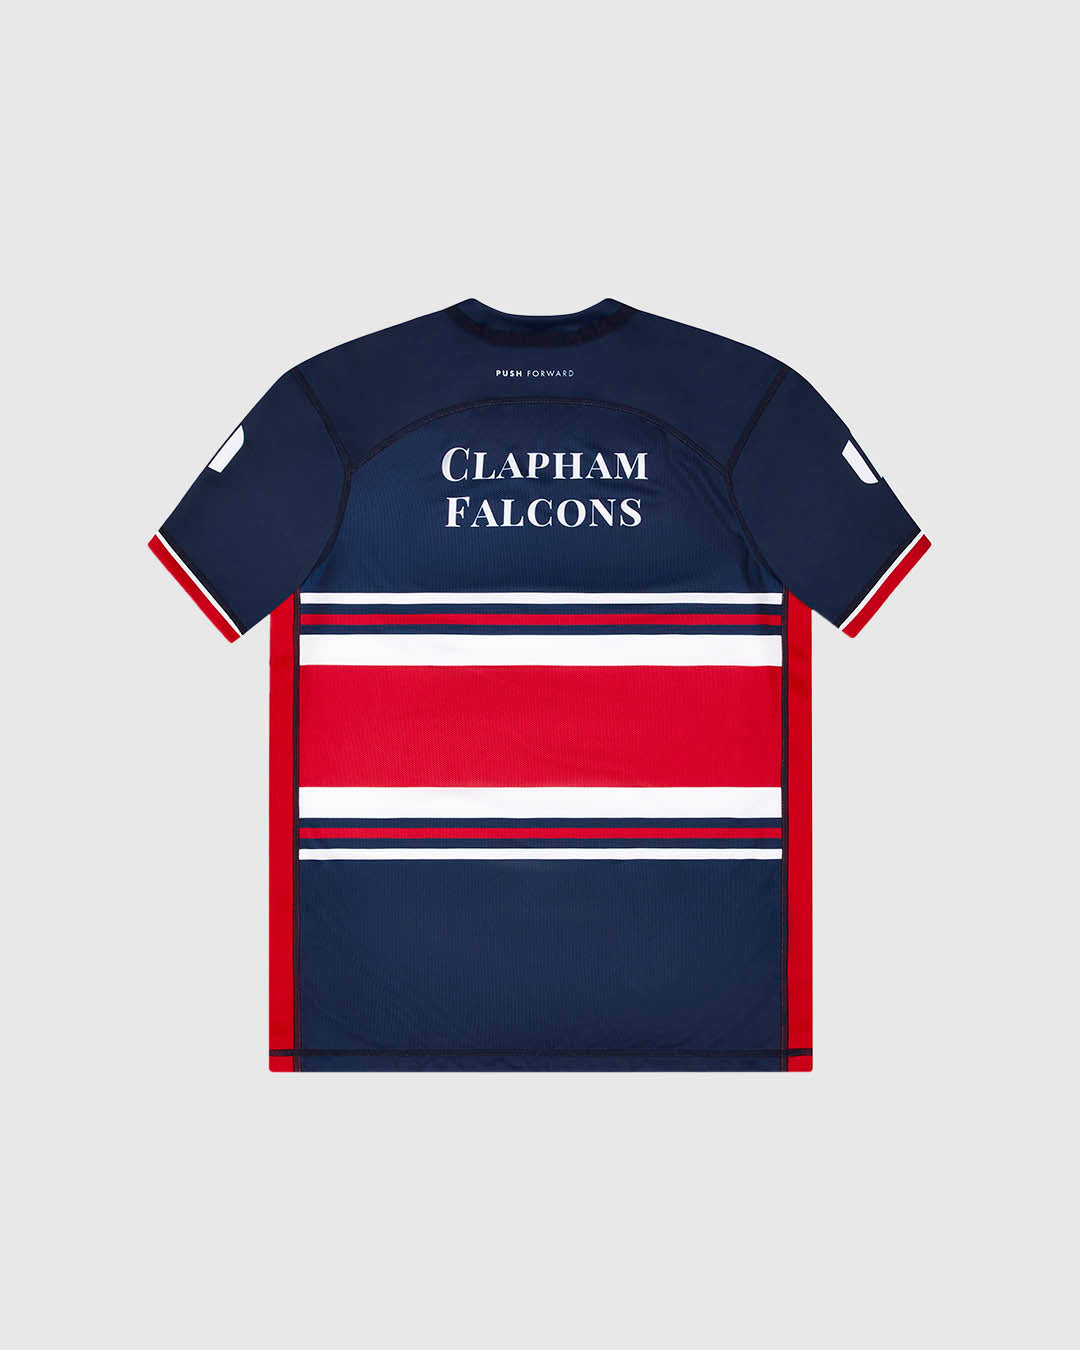 CF:001 - Clapham Falcons Replica Rugby Shirt - Navy